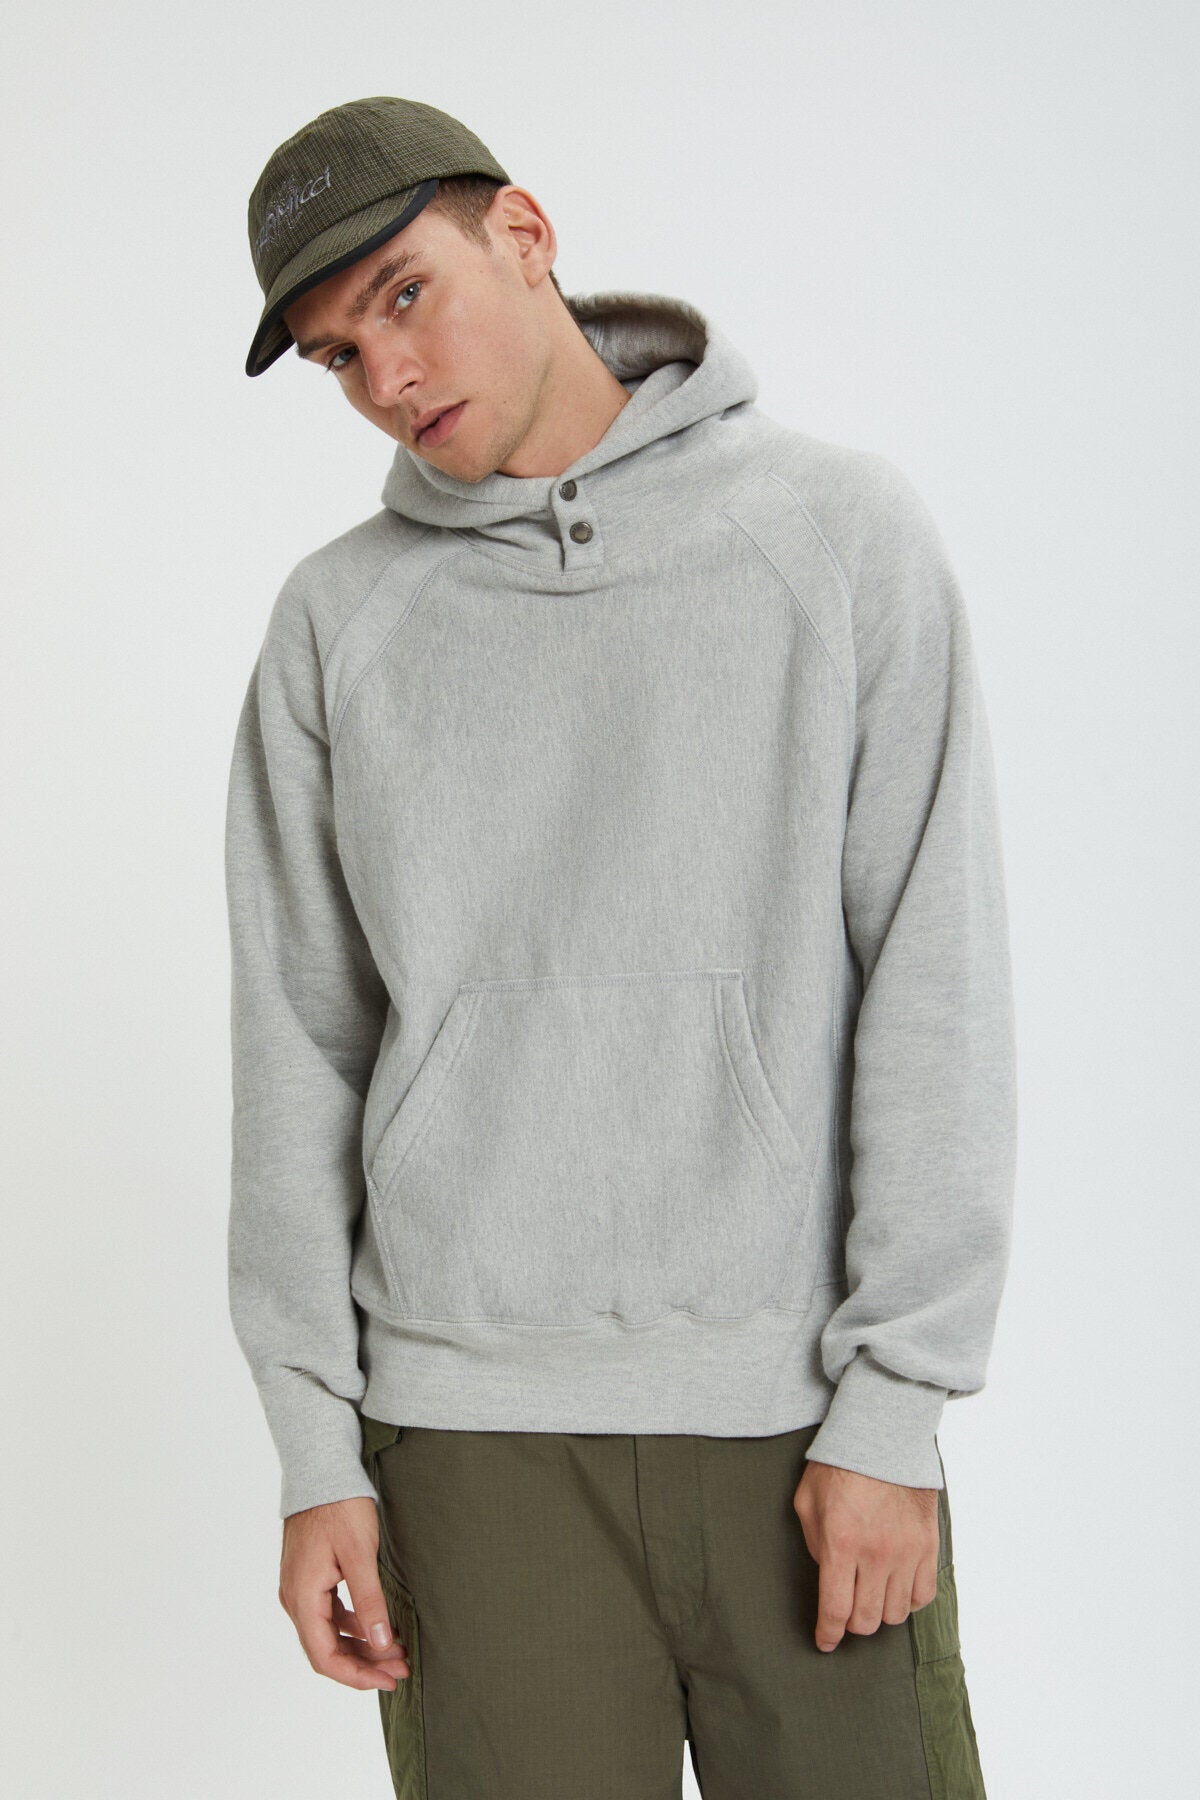 Men's Sweatshirts | WP Store – WPSTORE.COM